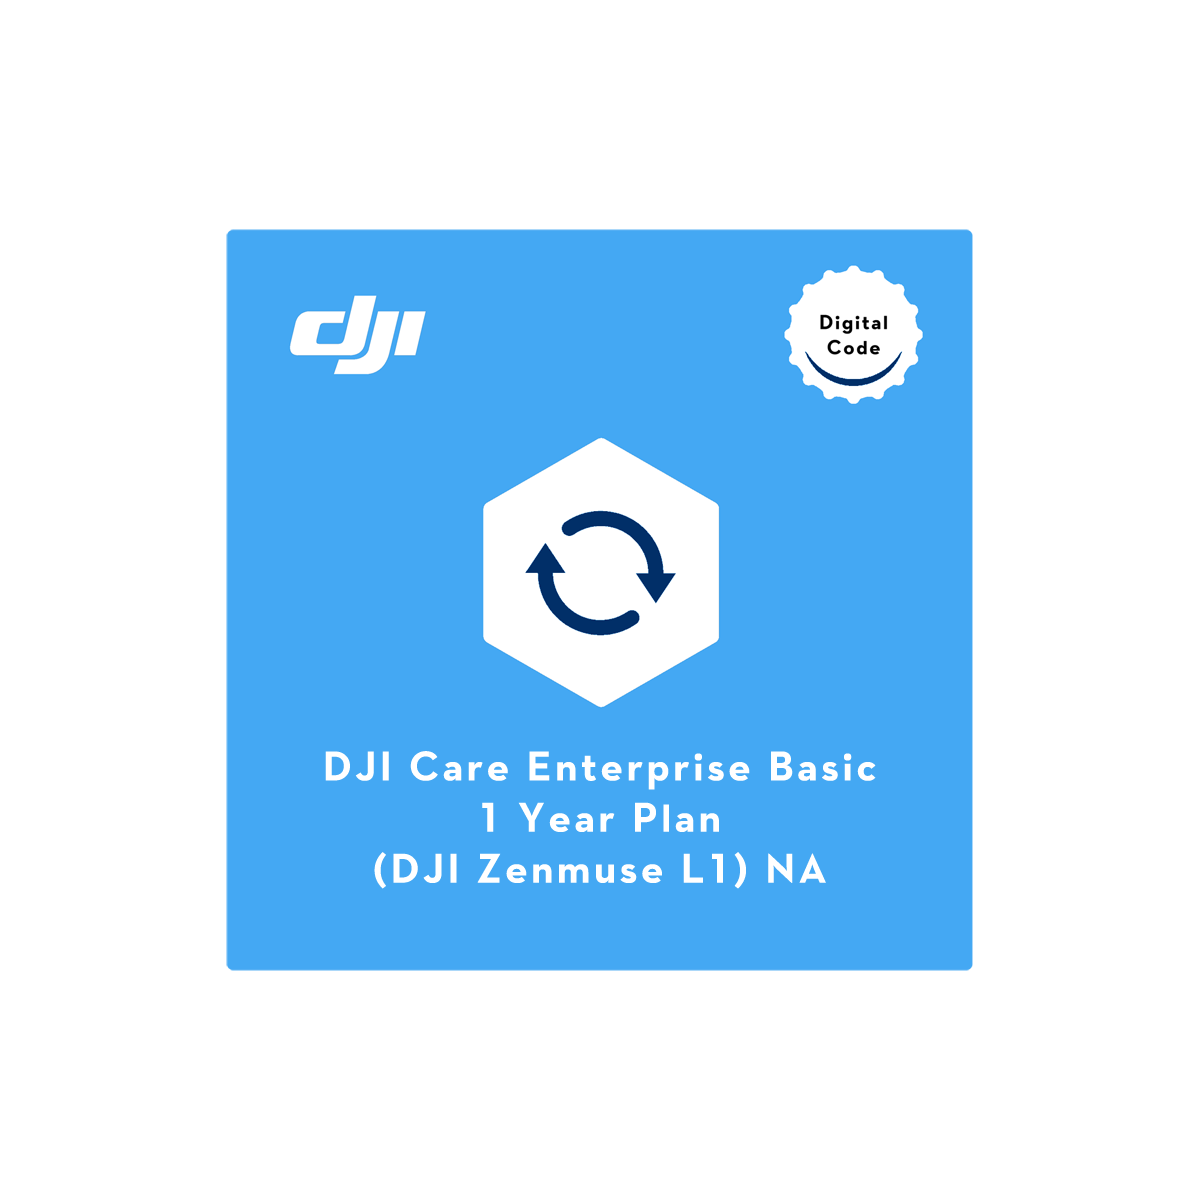 DJI Care Enterprise Basic (L1) NA